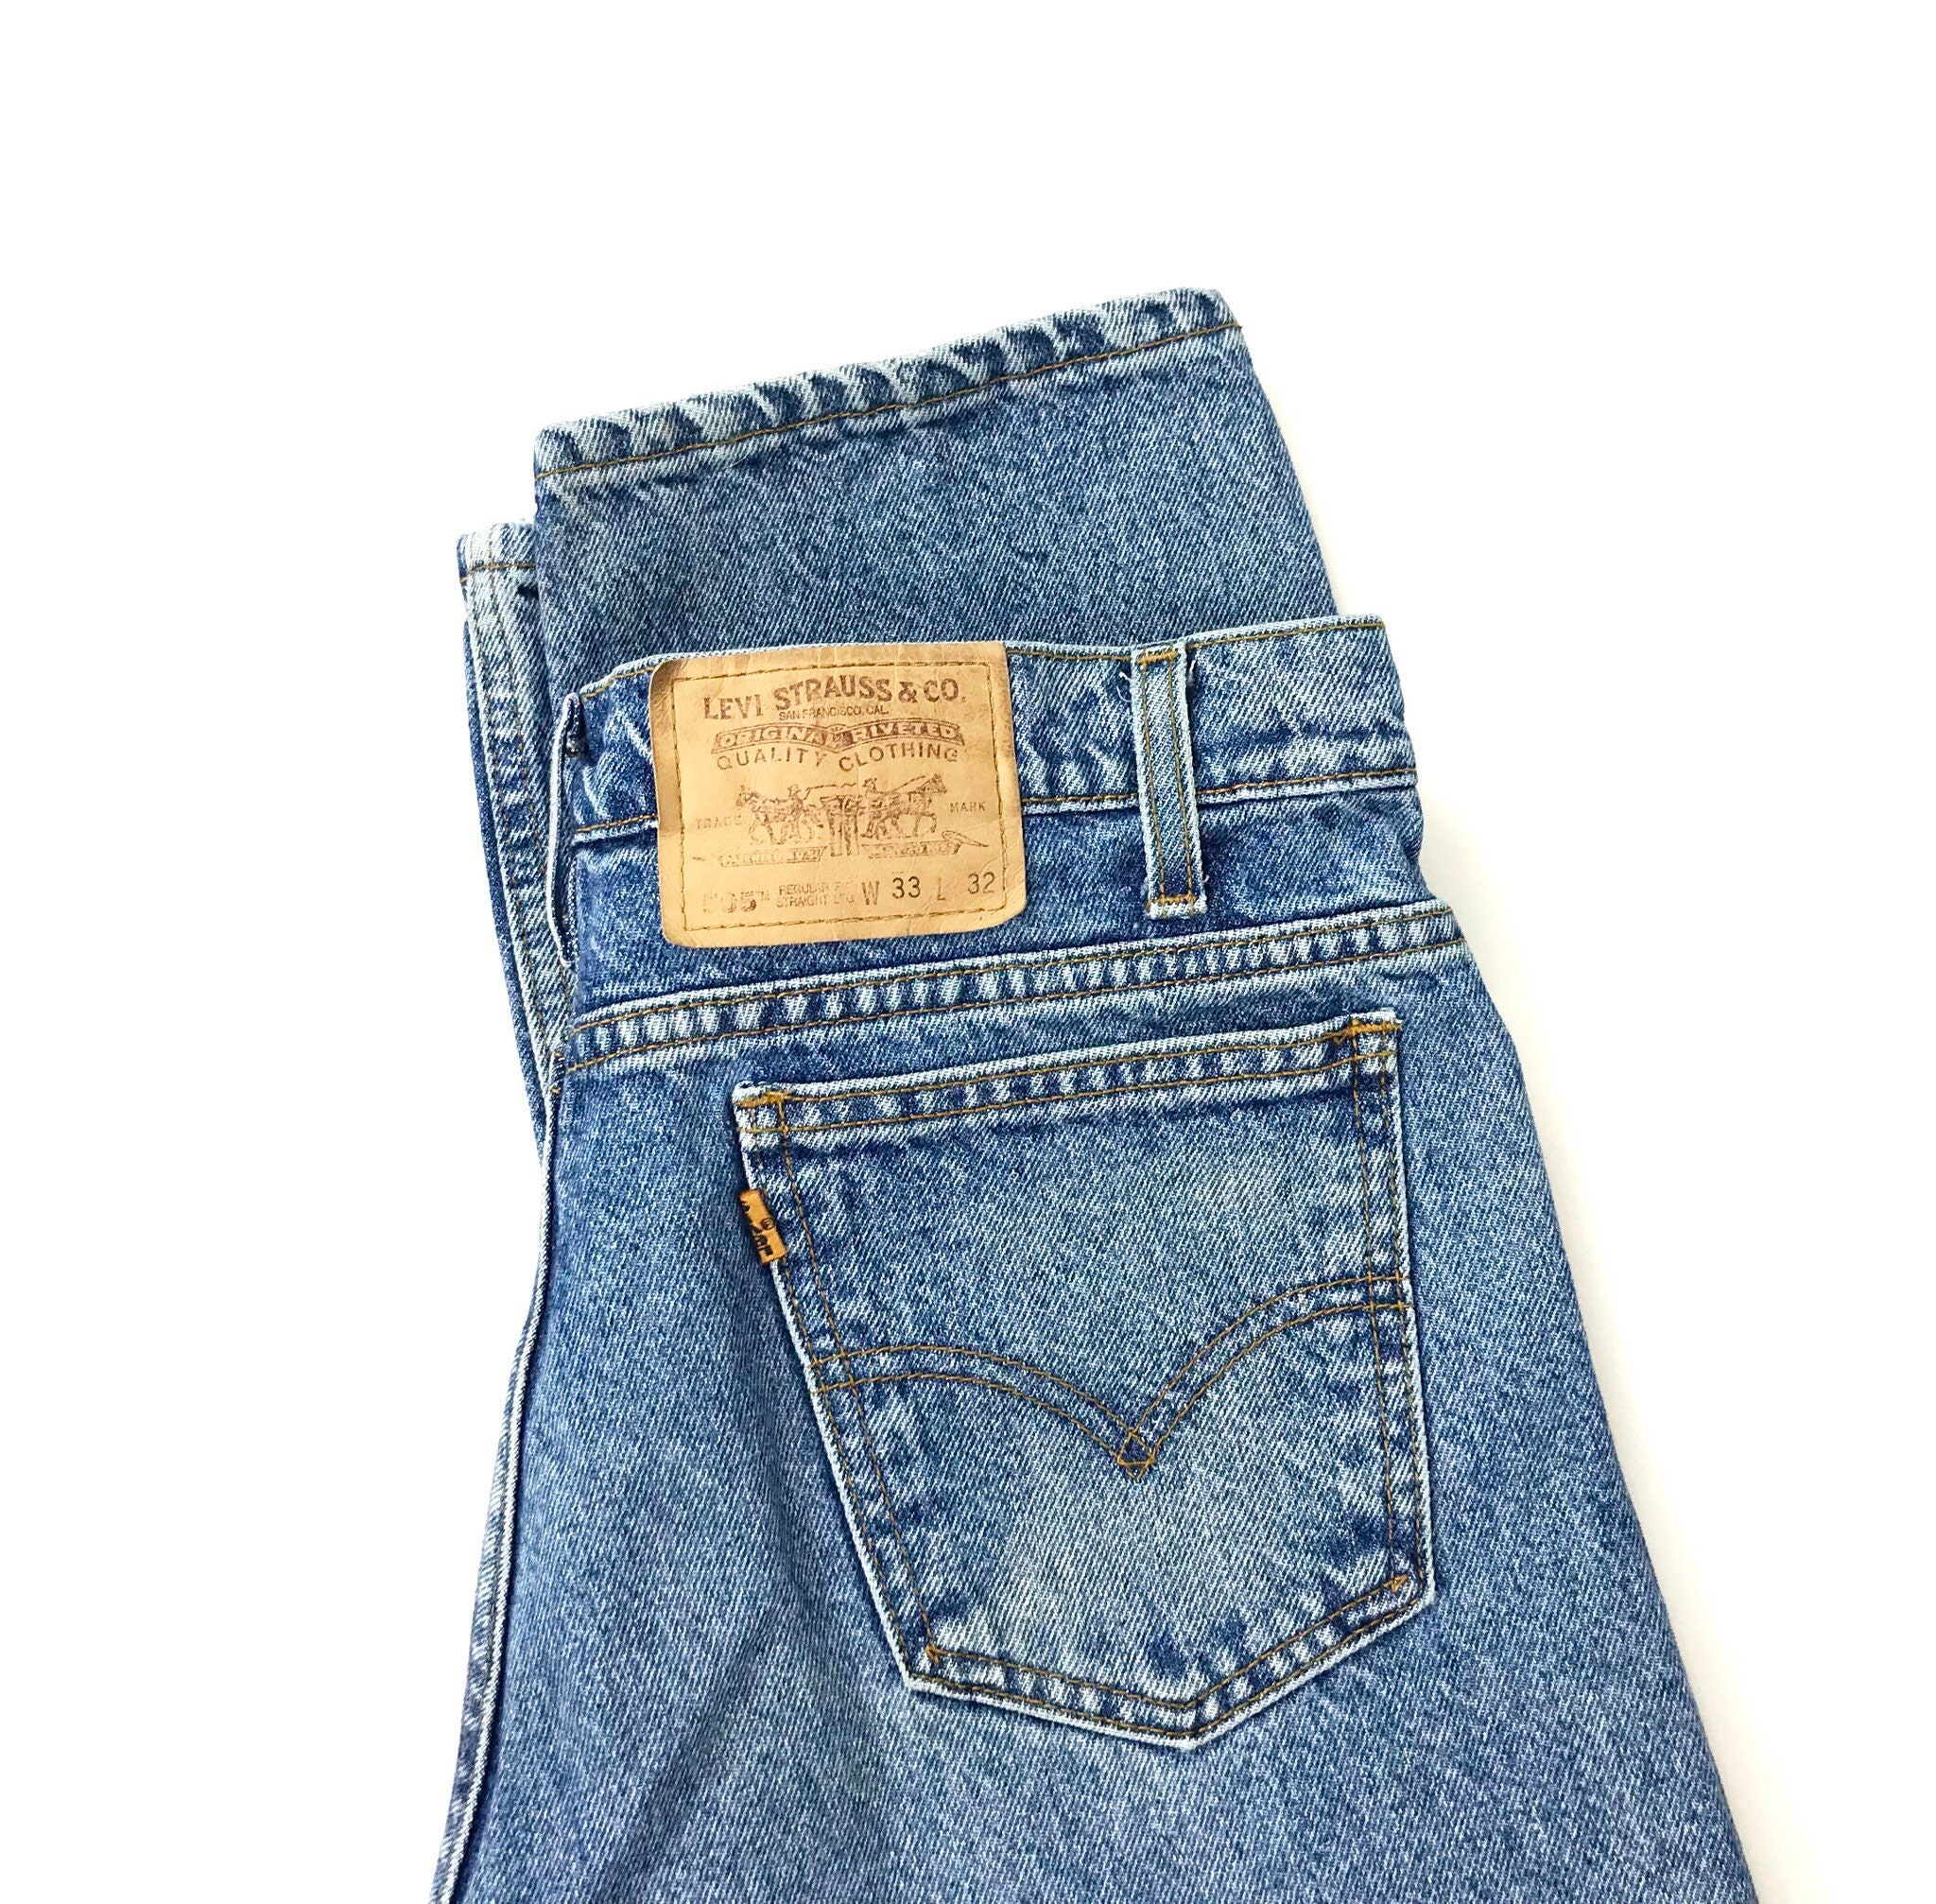 Levi's 505 Orange Tab Jeans / Size 30 31